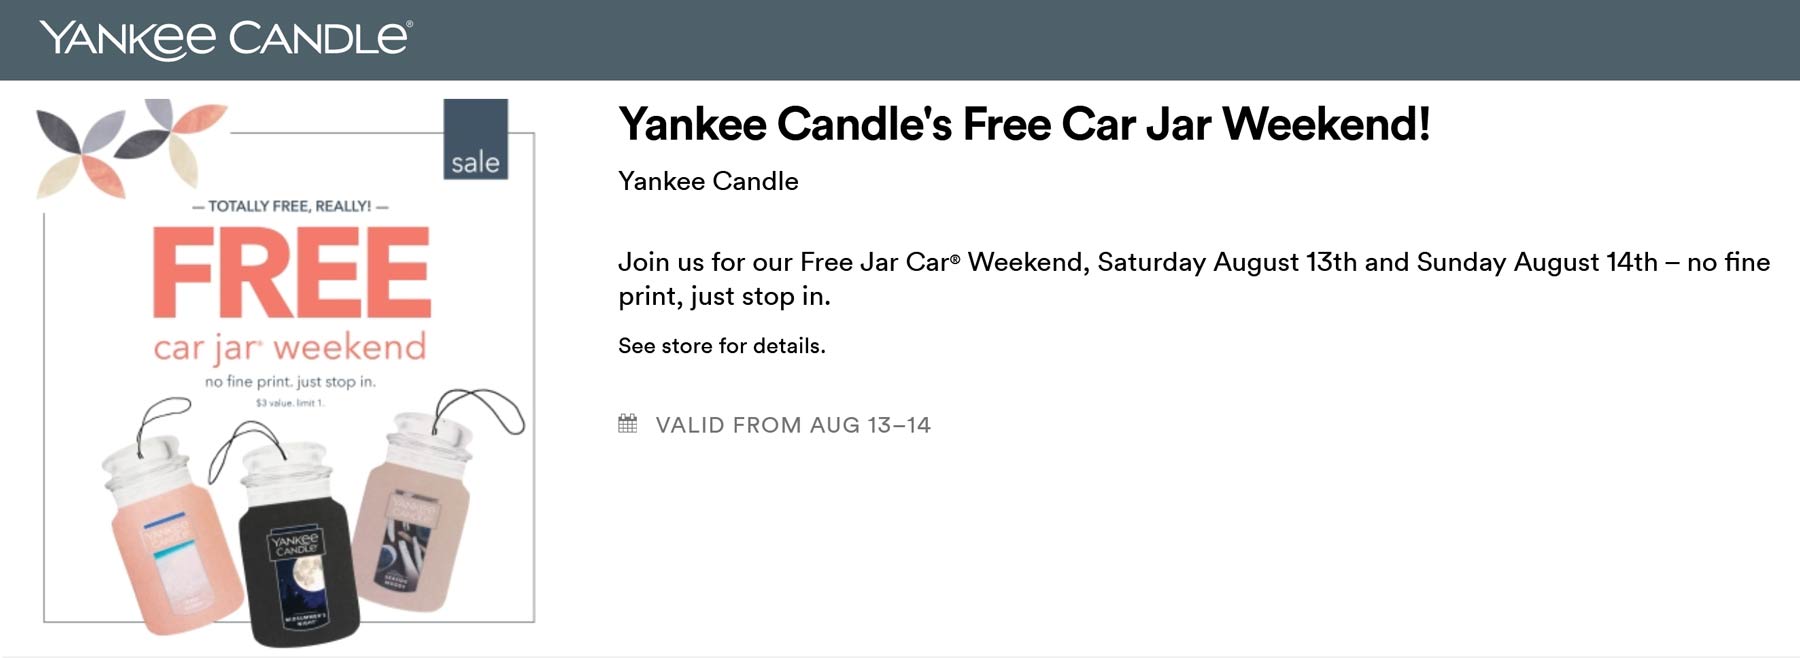 Yankee Candle stores Coupon  Free car jar today at Yankee Candle, no purchase necessary #yankeecandle 